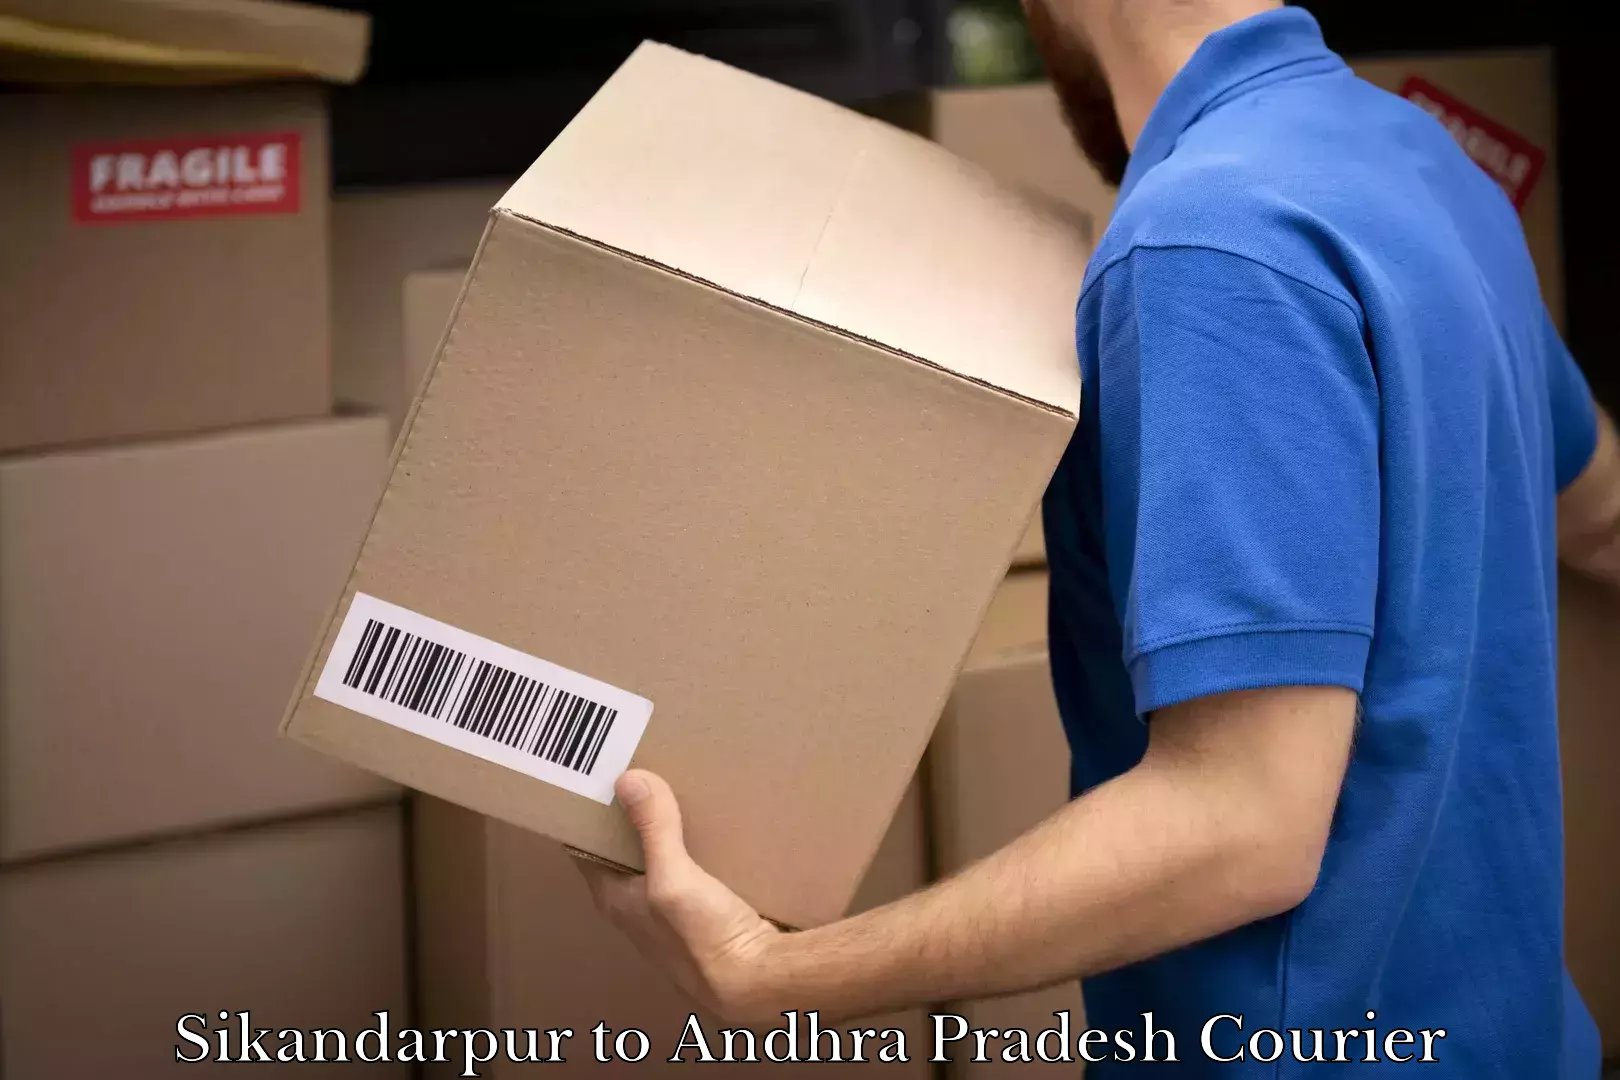 Courier service comparison Sikandarpur to Andhra Pradesh